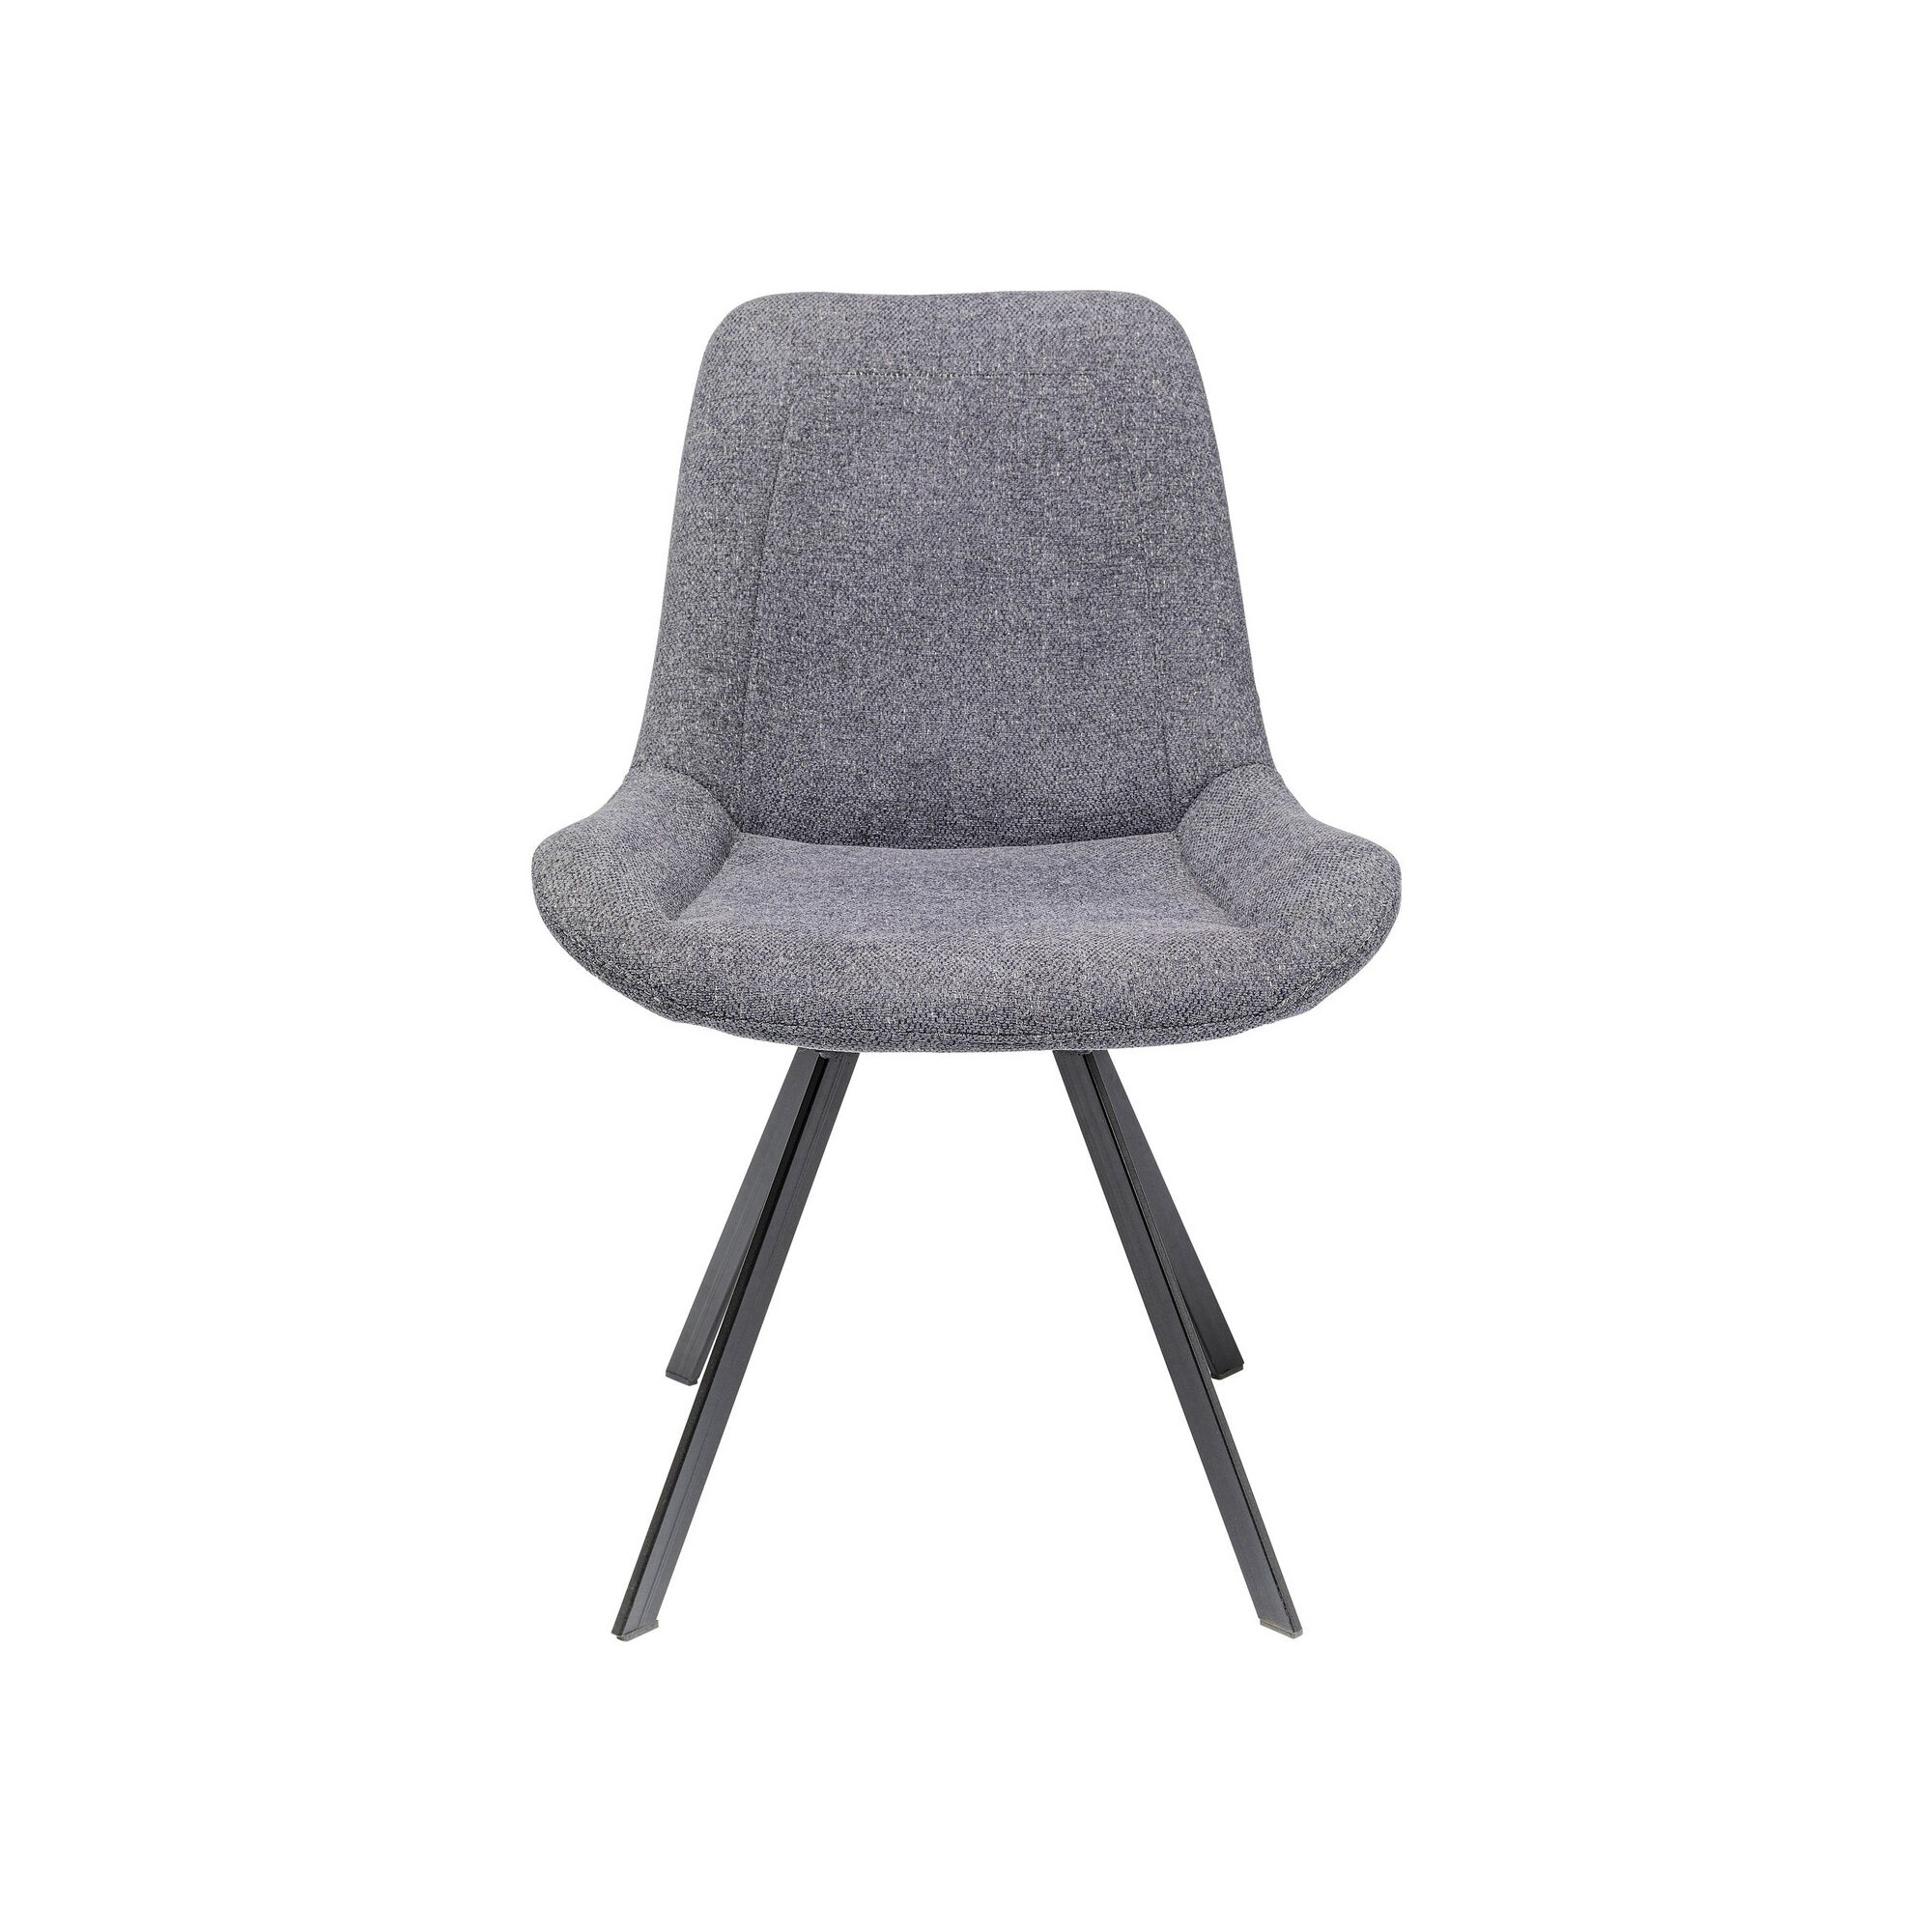 Chaise pivotante Baron grise Kare Design